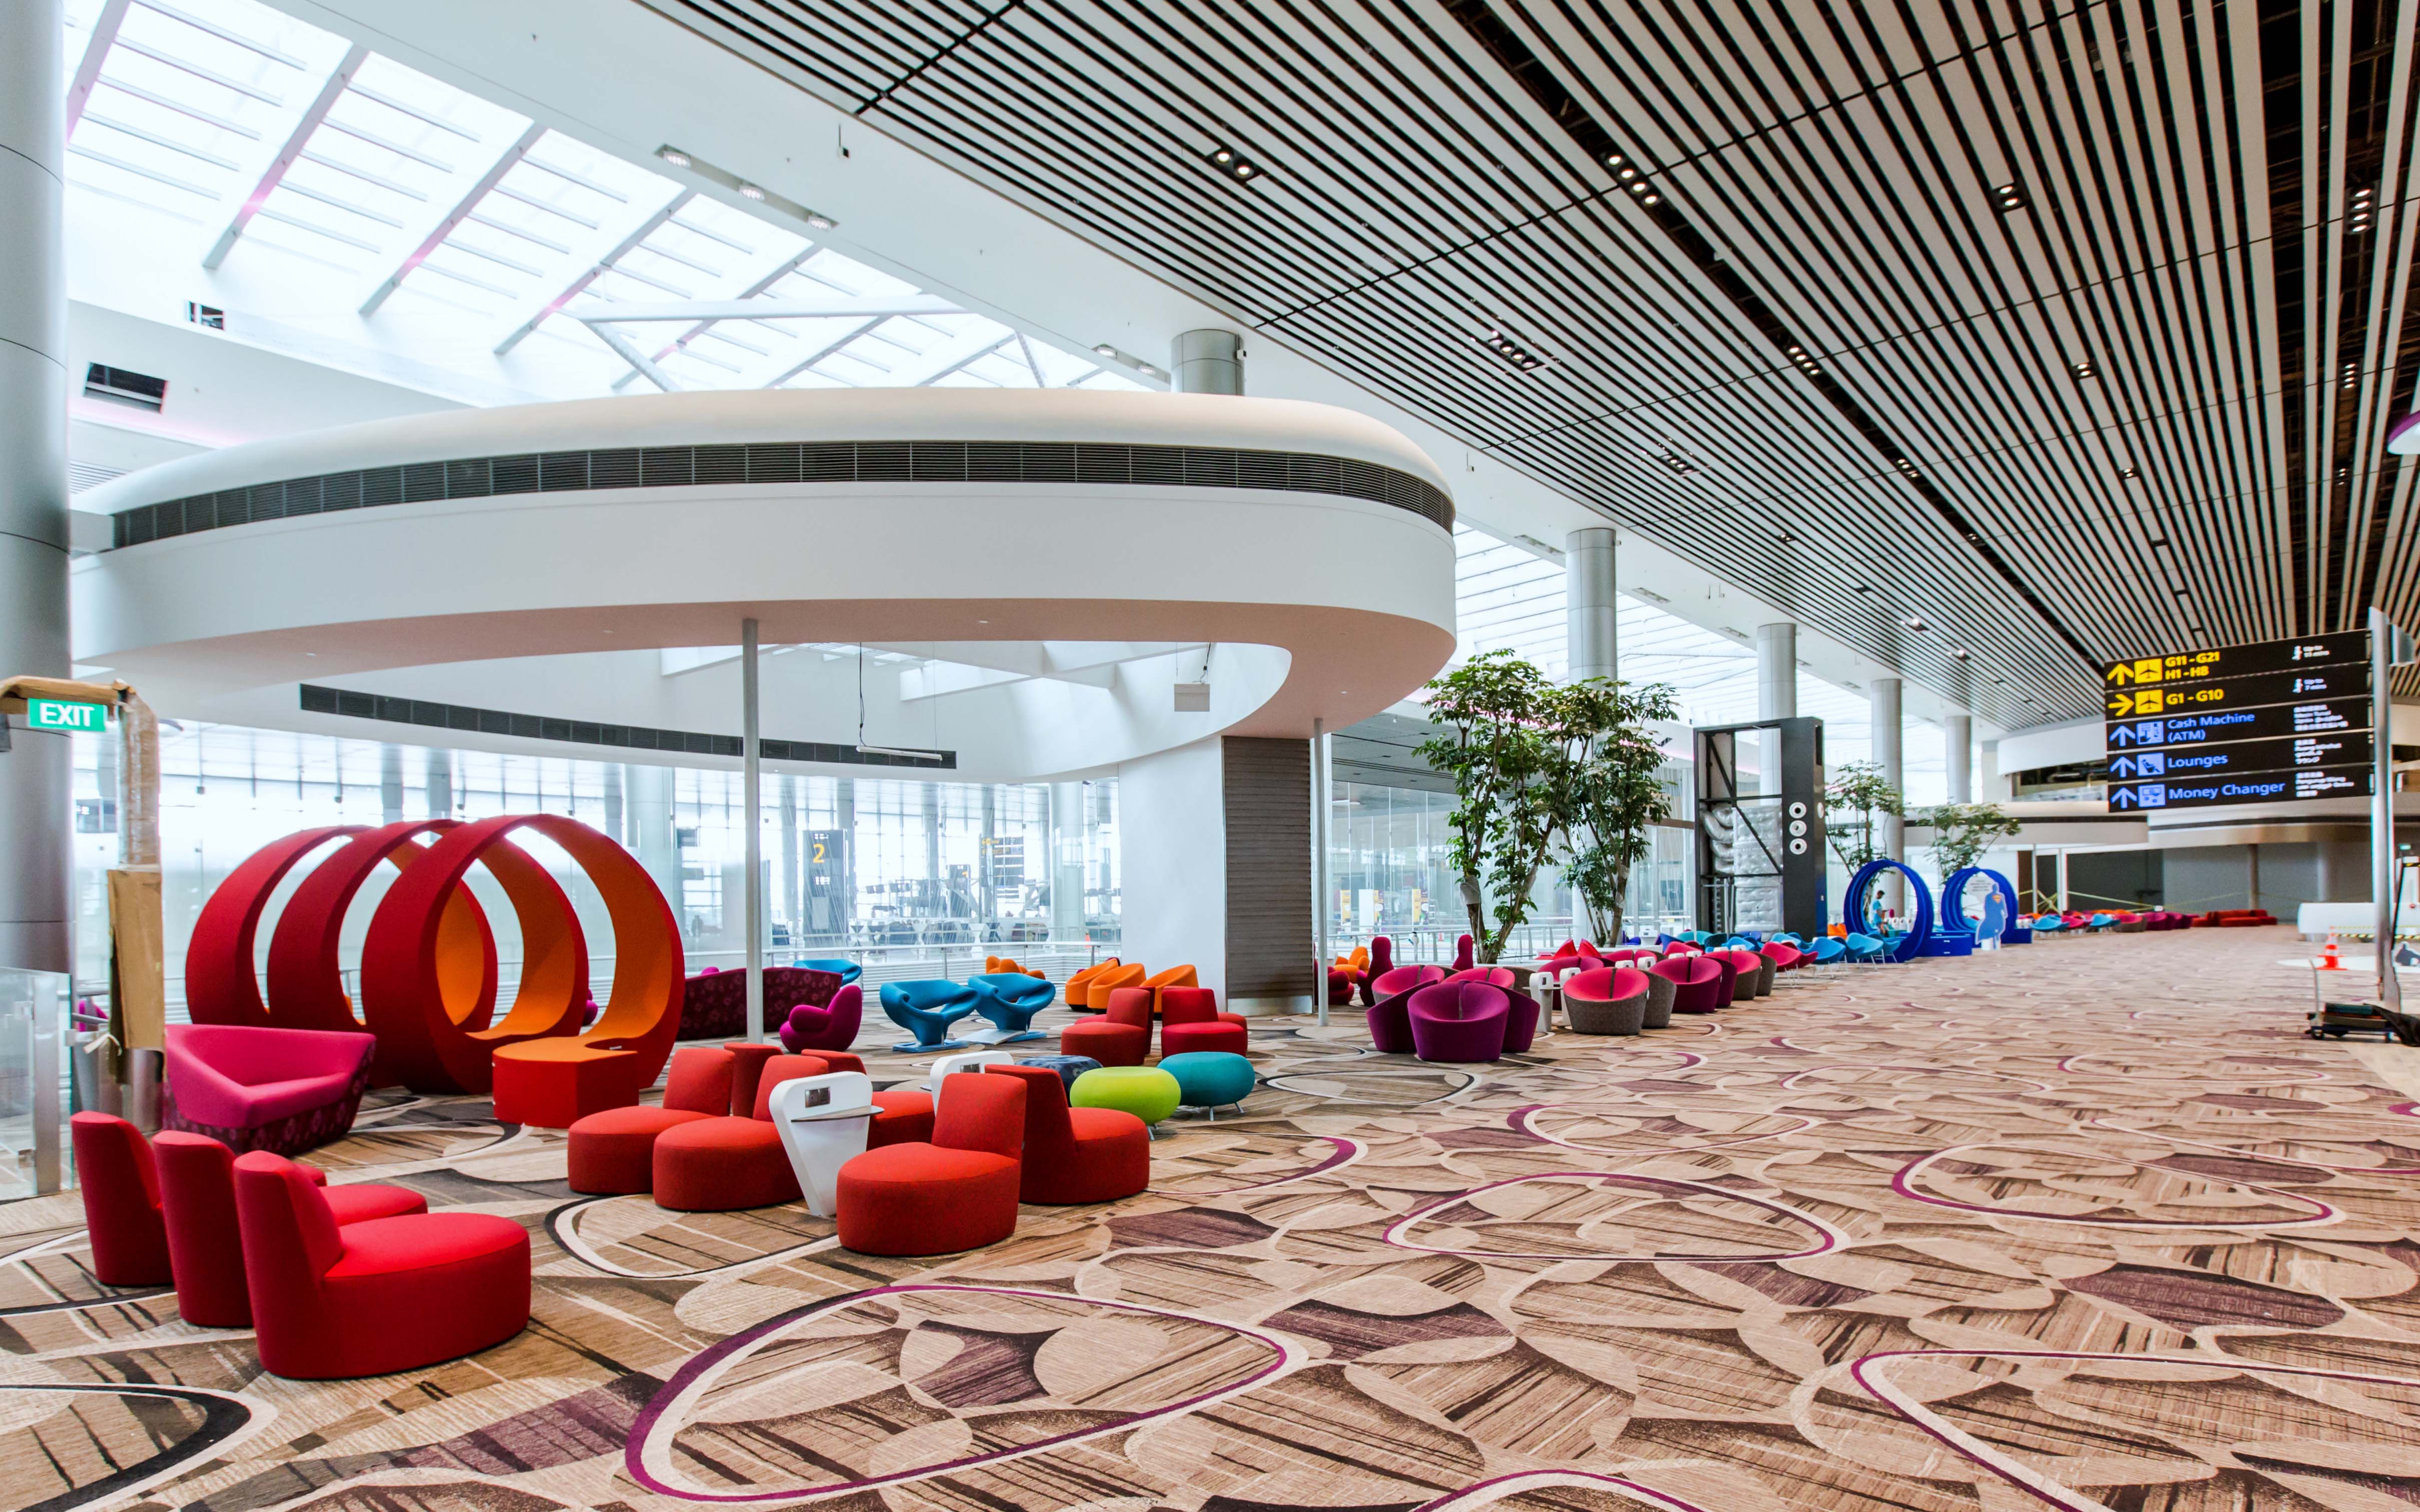 Changi Airport Terminal 4 seating area